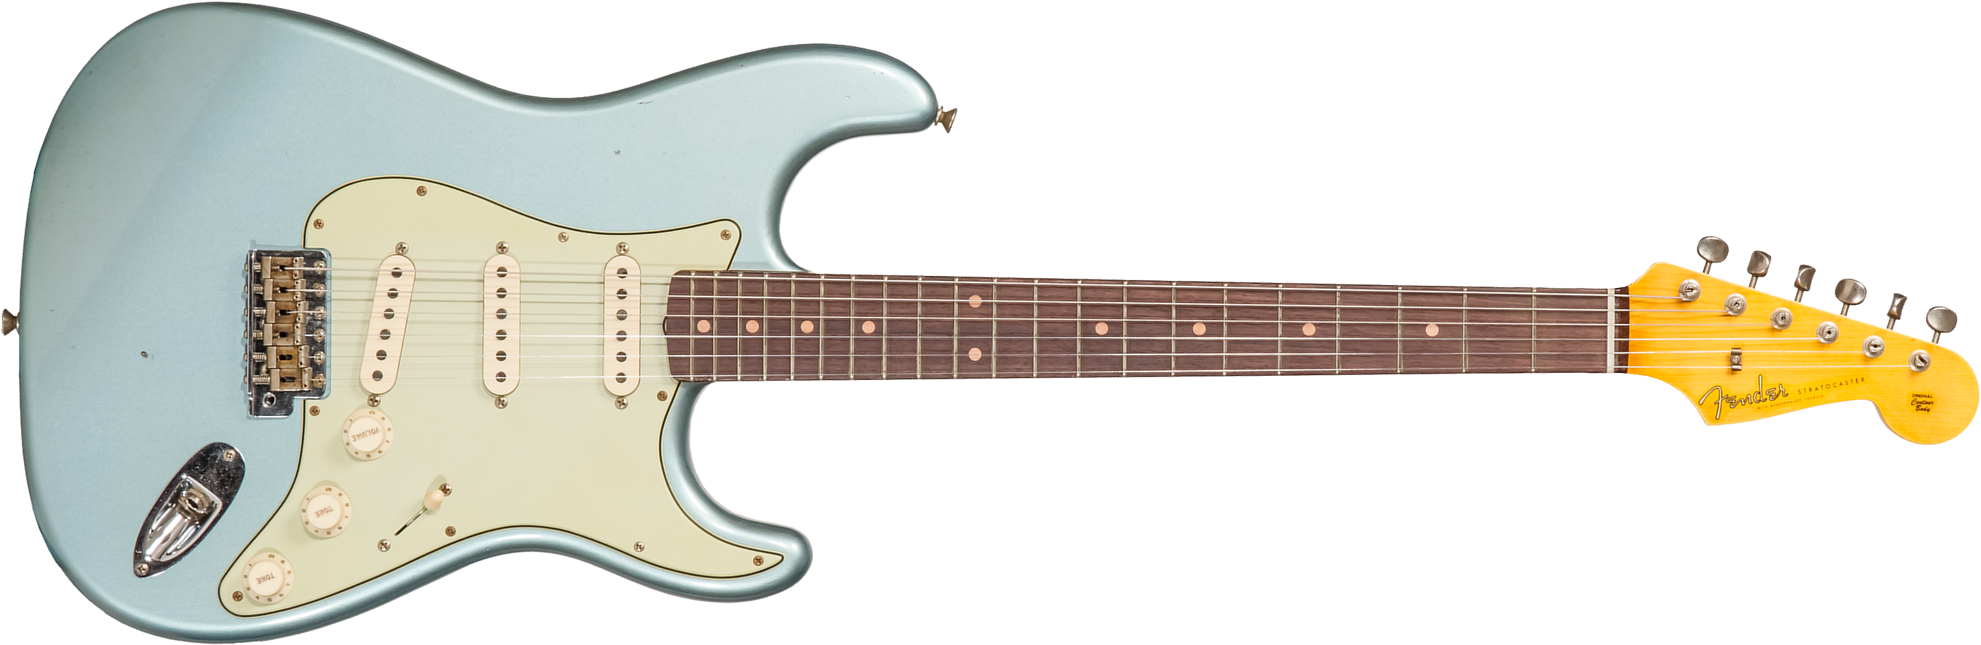 Fender Custom Shop Strat 1959 3s Trem Rw #cz570883 - Journeyman Relic Teal Green Metallic - Guitarra eléctrica con forma de str. - Main picture